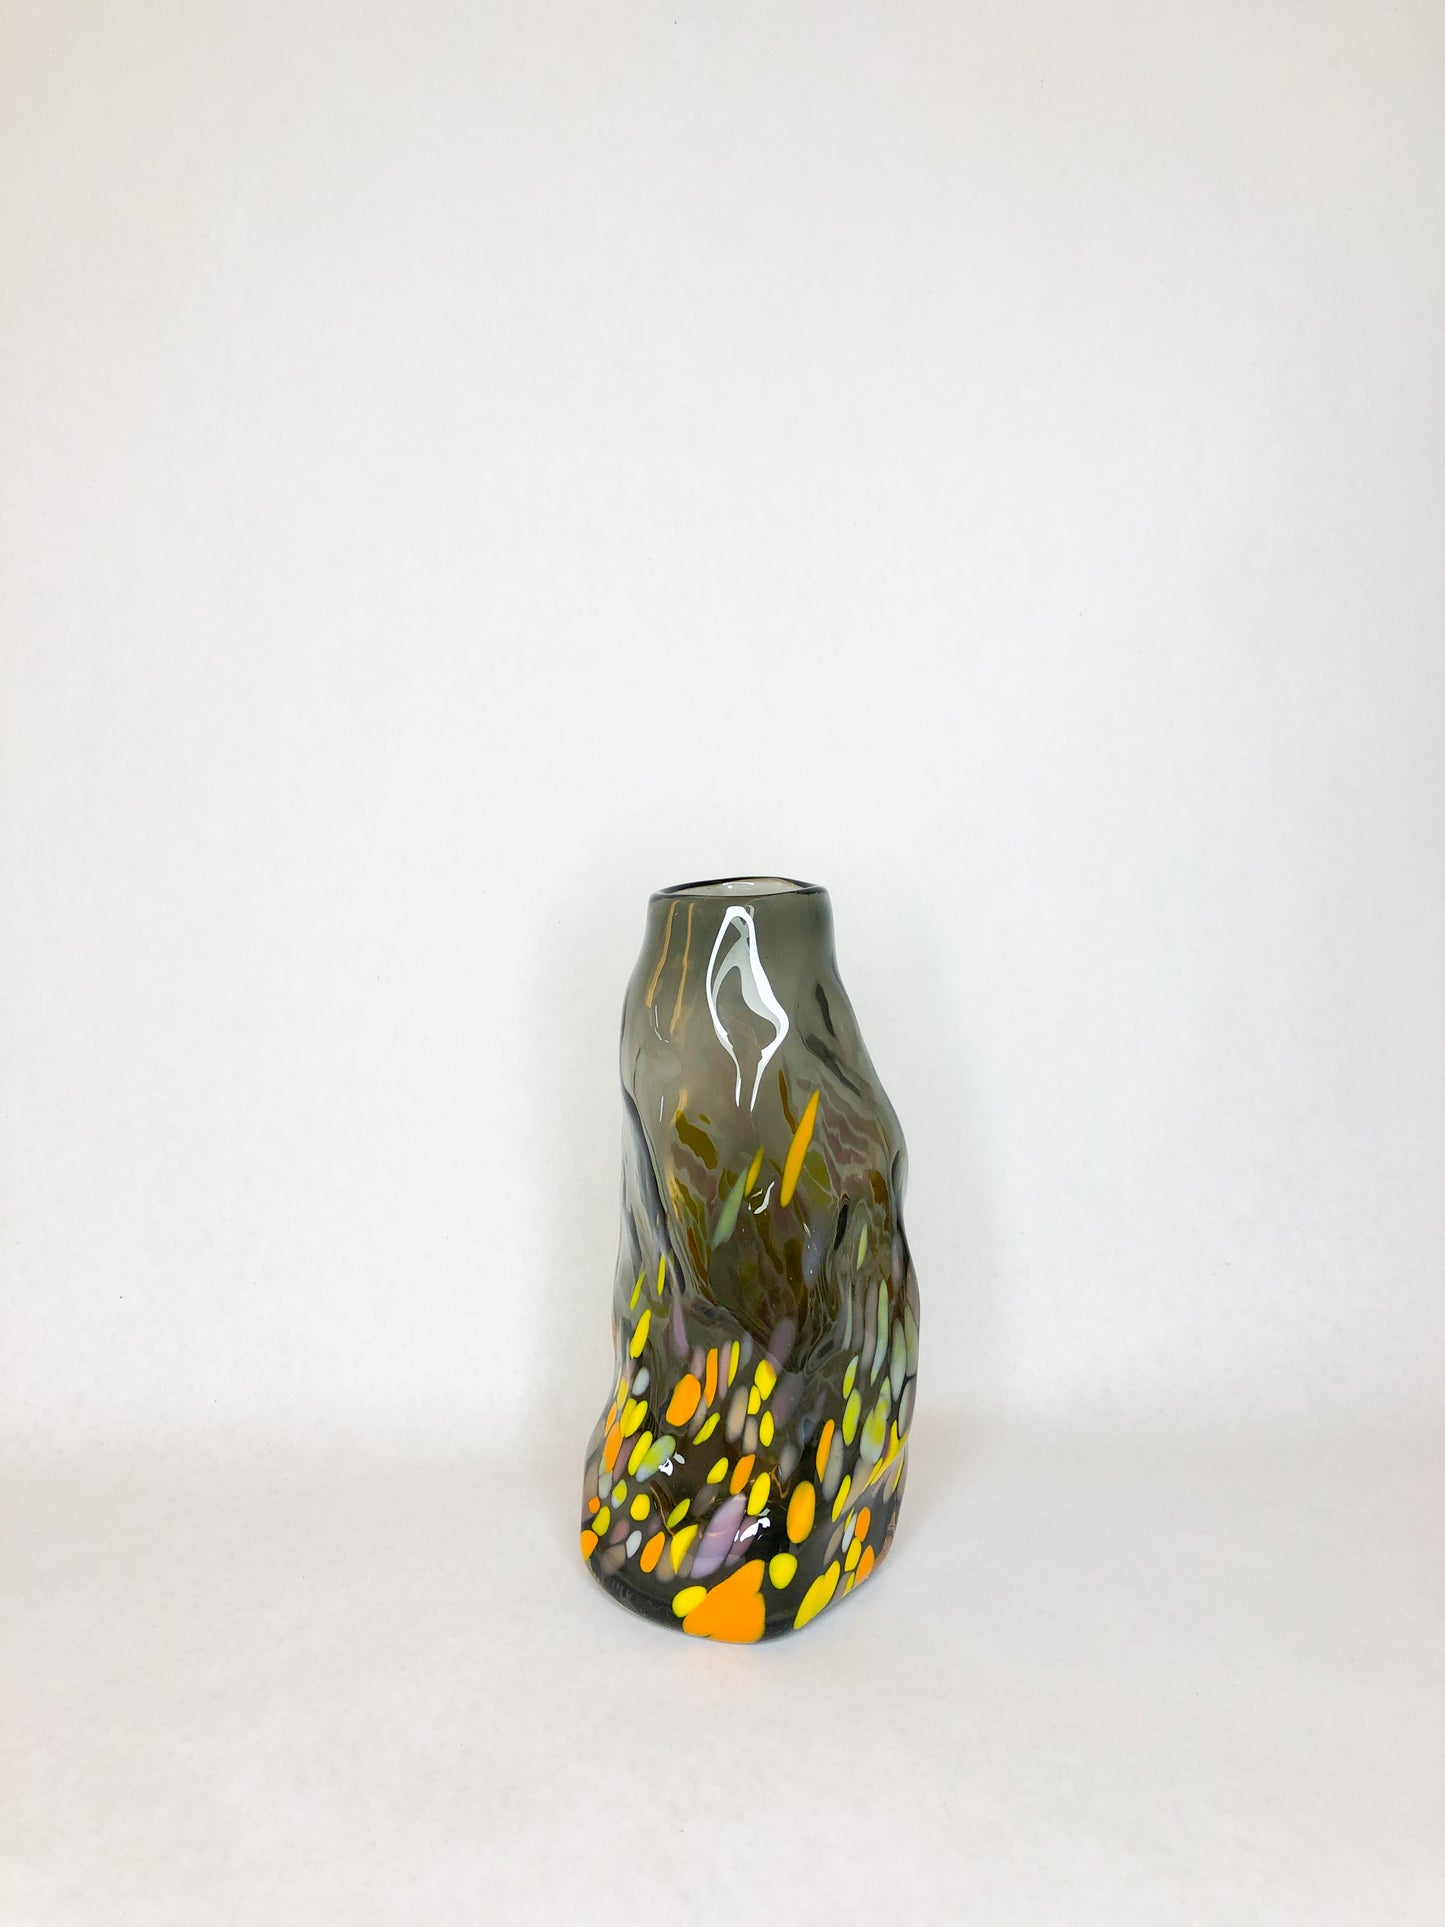 Small Glass Vase no. 135